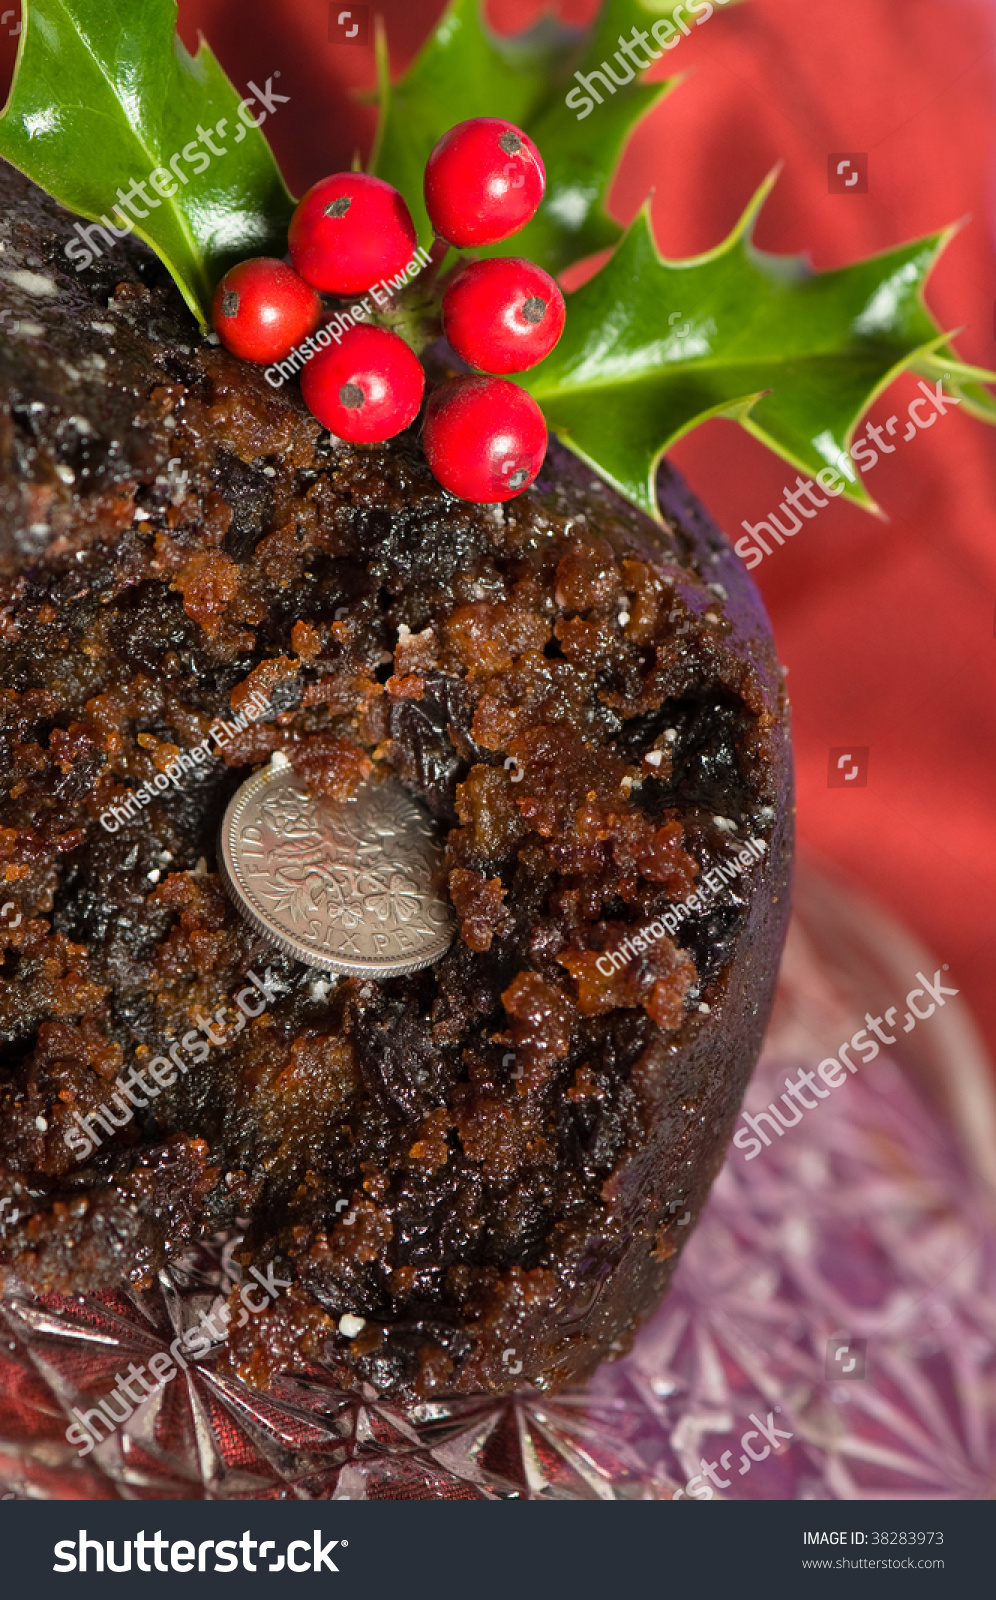 Close Old Fashioned Christmas Pudding Sixpence Stock Photo 38283973 ...